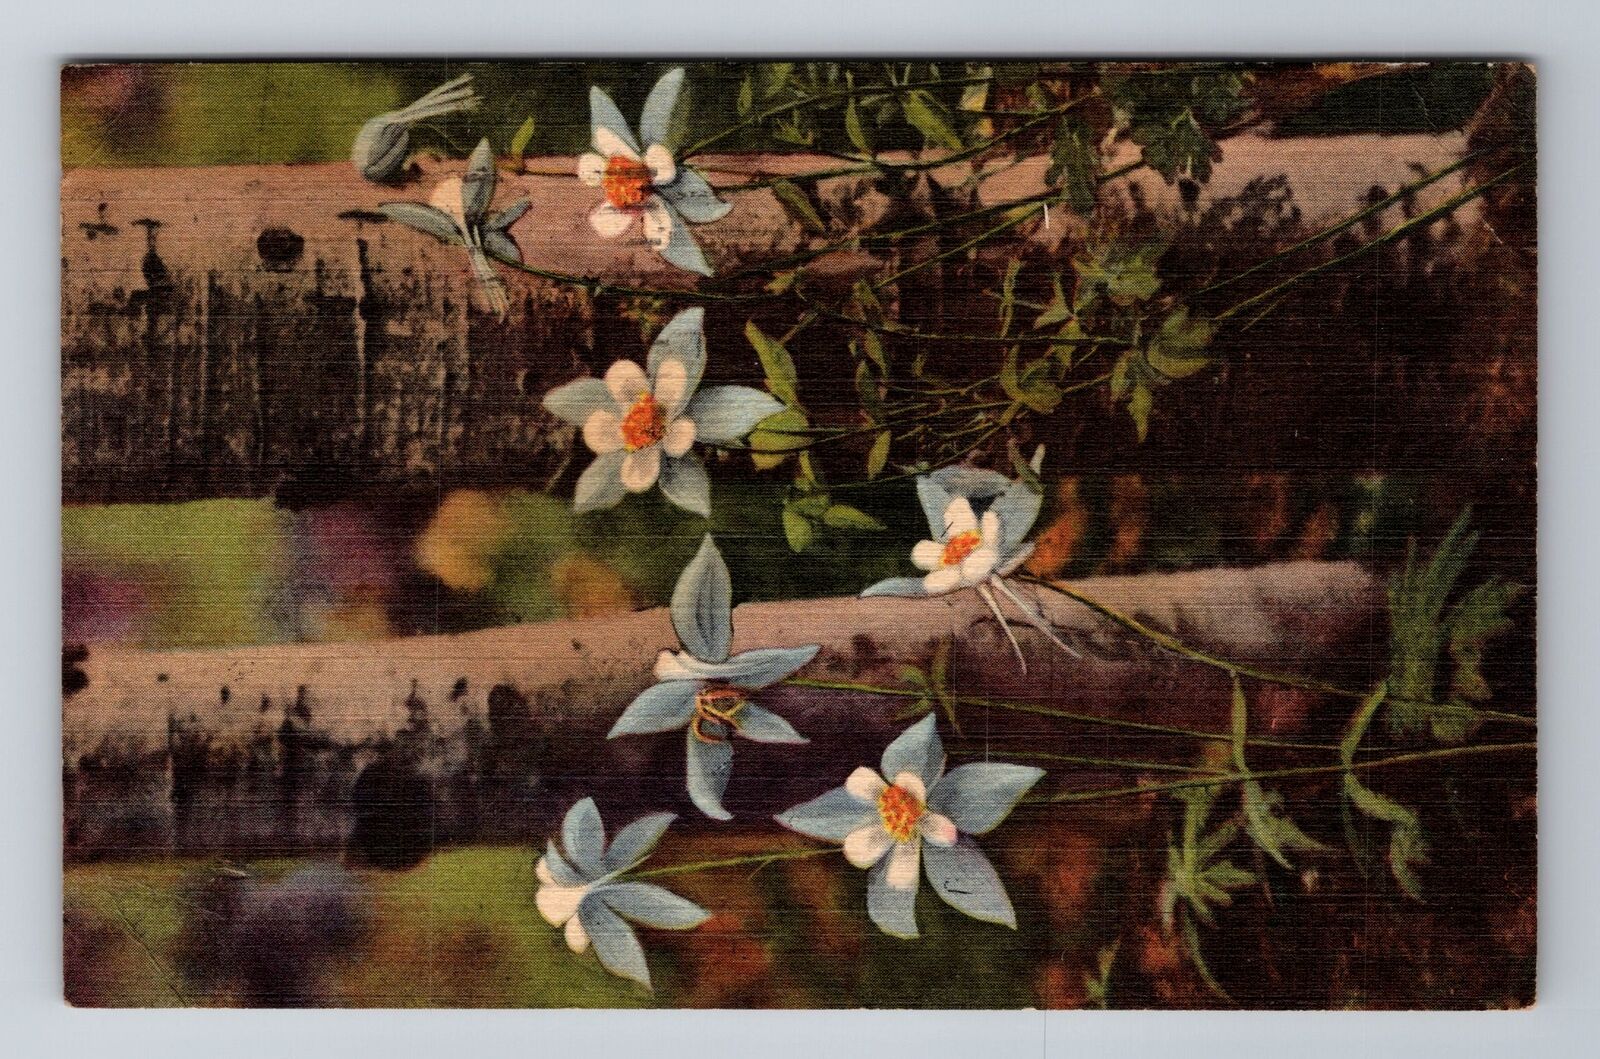 CO-Colorado, Columbines Growing Among The Aspens, Vintage c1953 Postcard